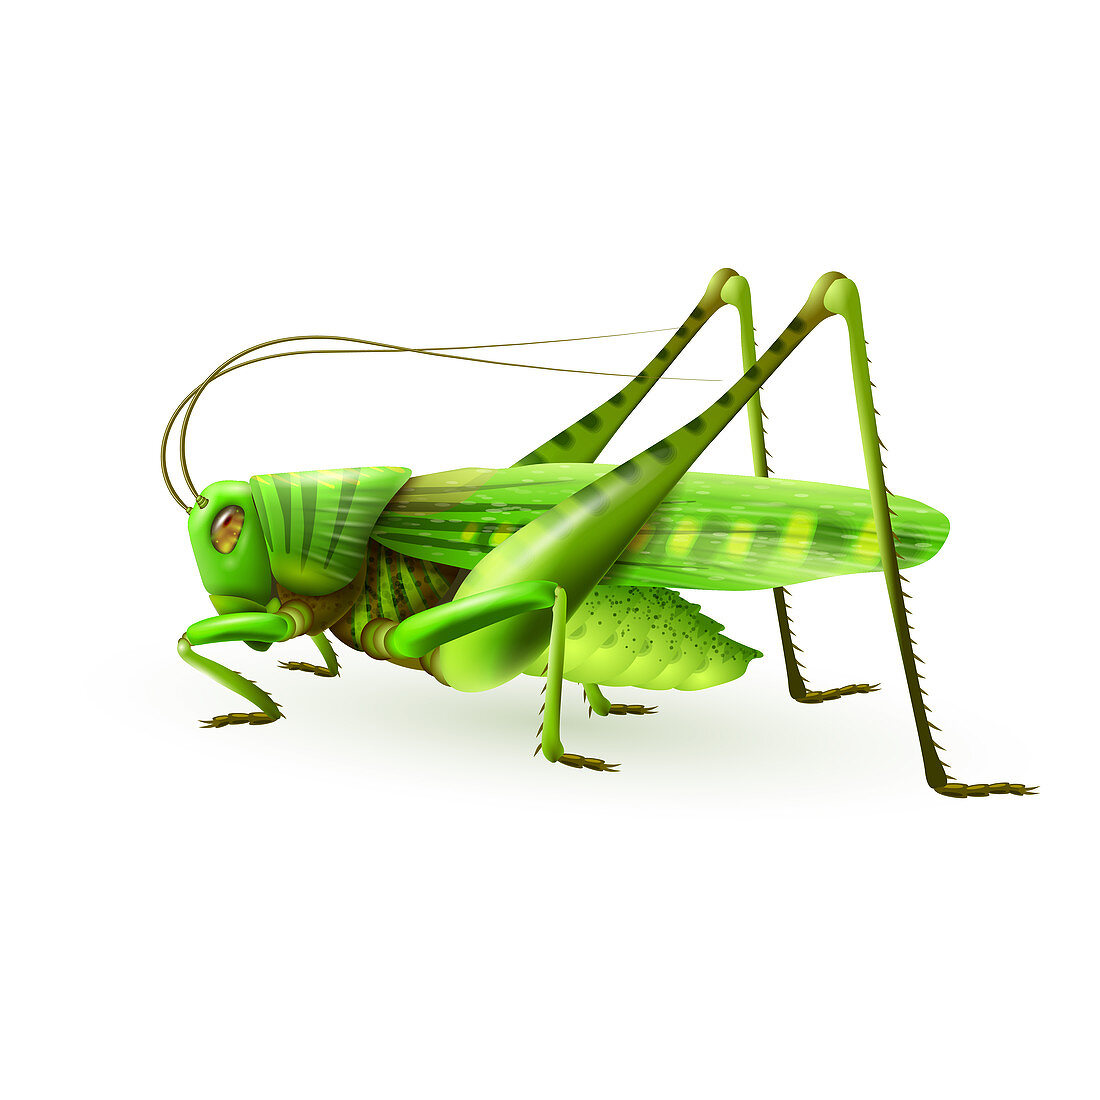 Grasshopper, illustration